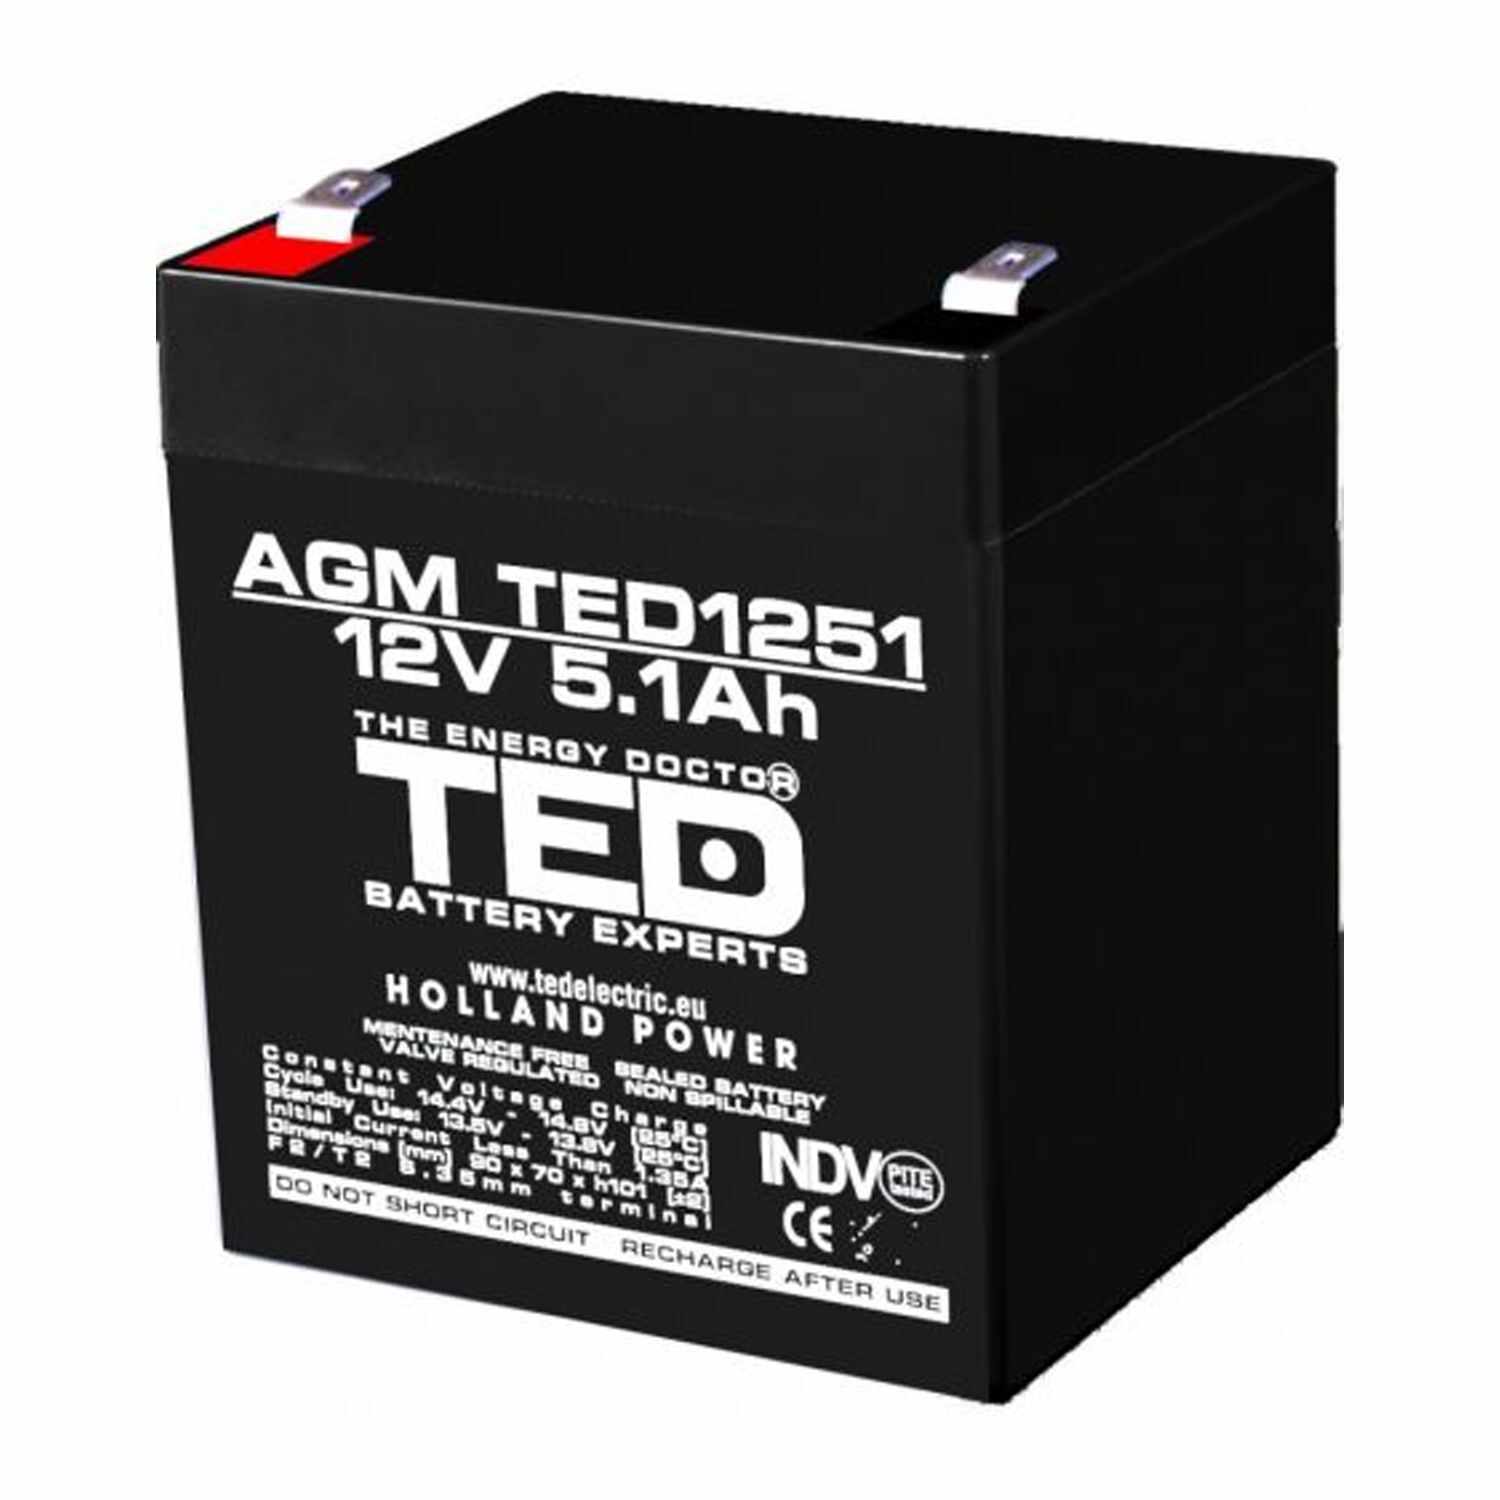 Acumulator AGM VRLA 12V 5,1A dimensiuni 90mm x 70mm x h 98mm F2 TED Battery Expert Holland TED003157 (10)